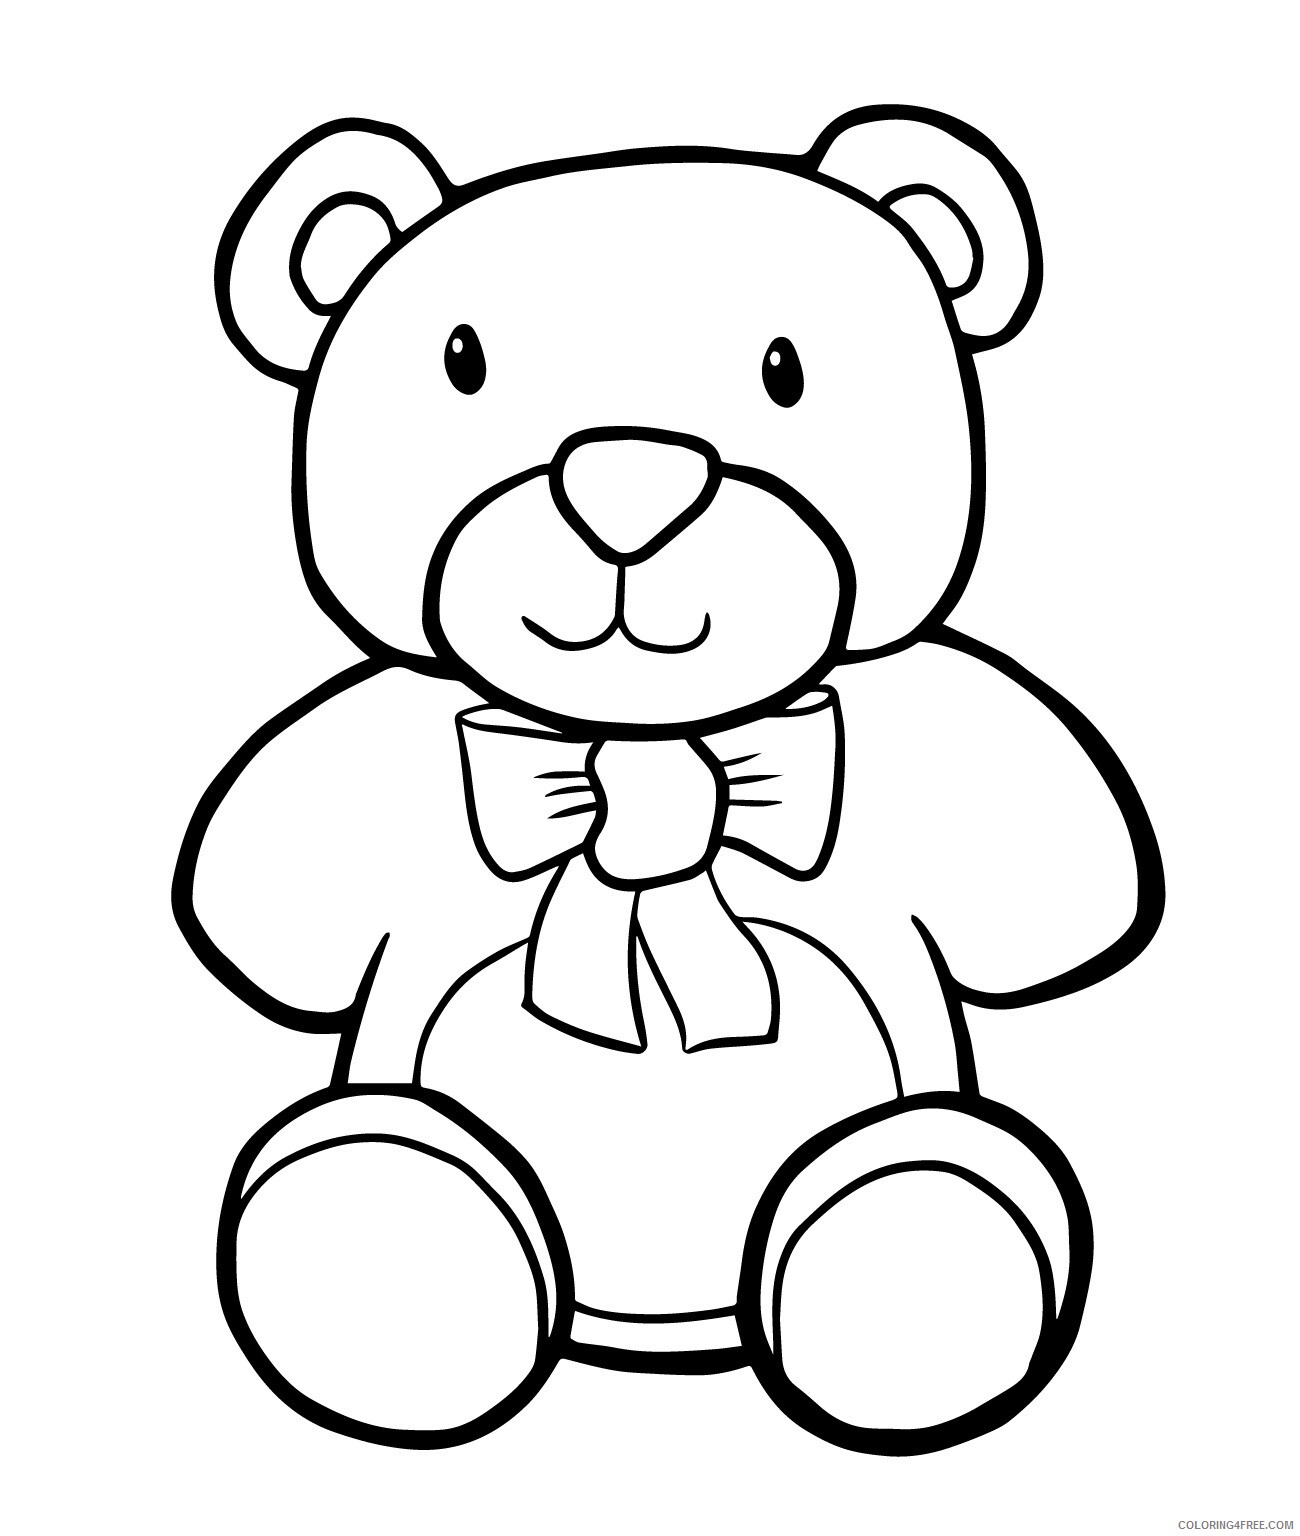 Bear Coloring Pages Animal Printable Sheets Teddy Bear Sheets 2021 0323 Coloring4free